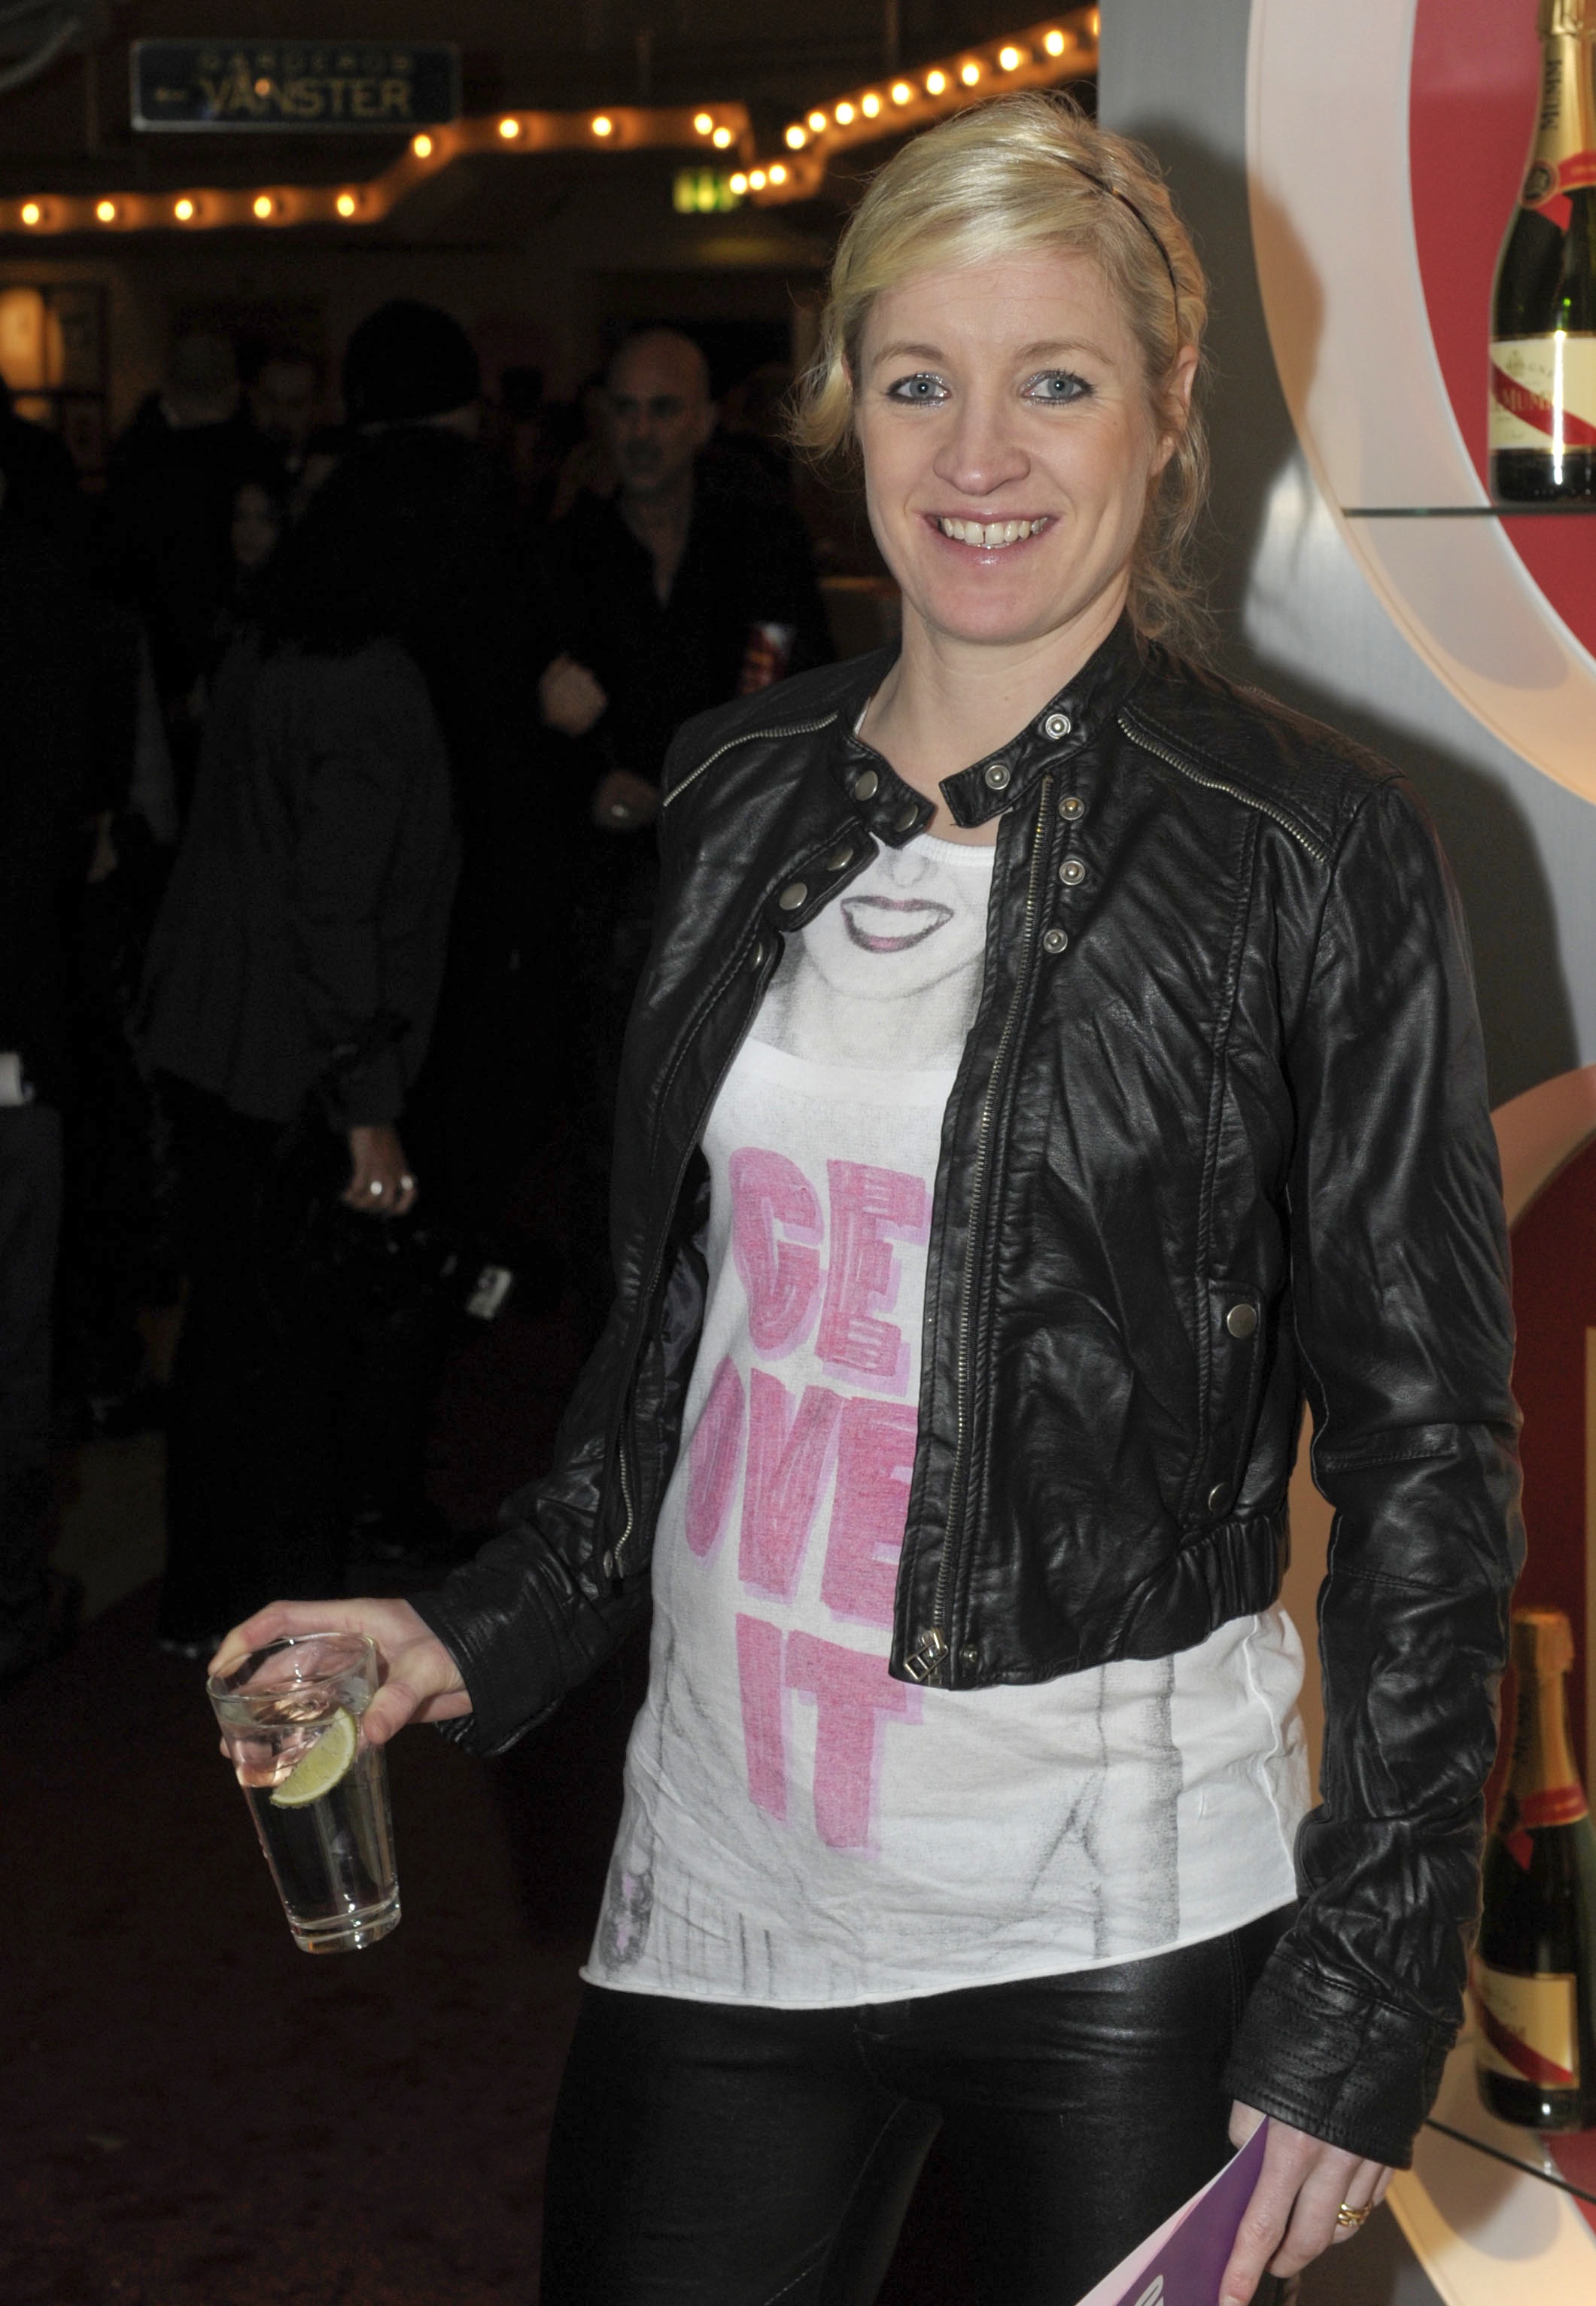 4. Victoria Svensson på QX gaygala 2010.